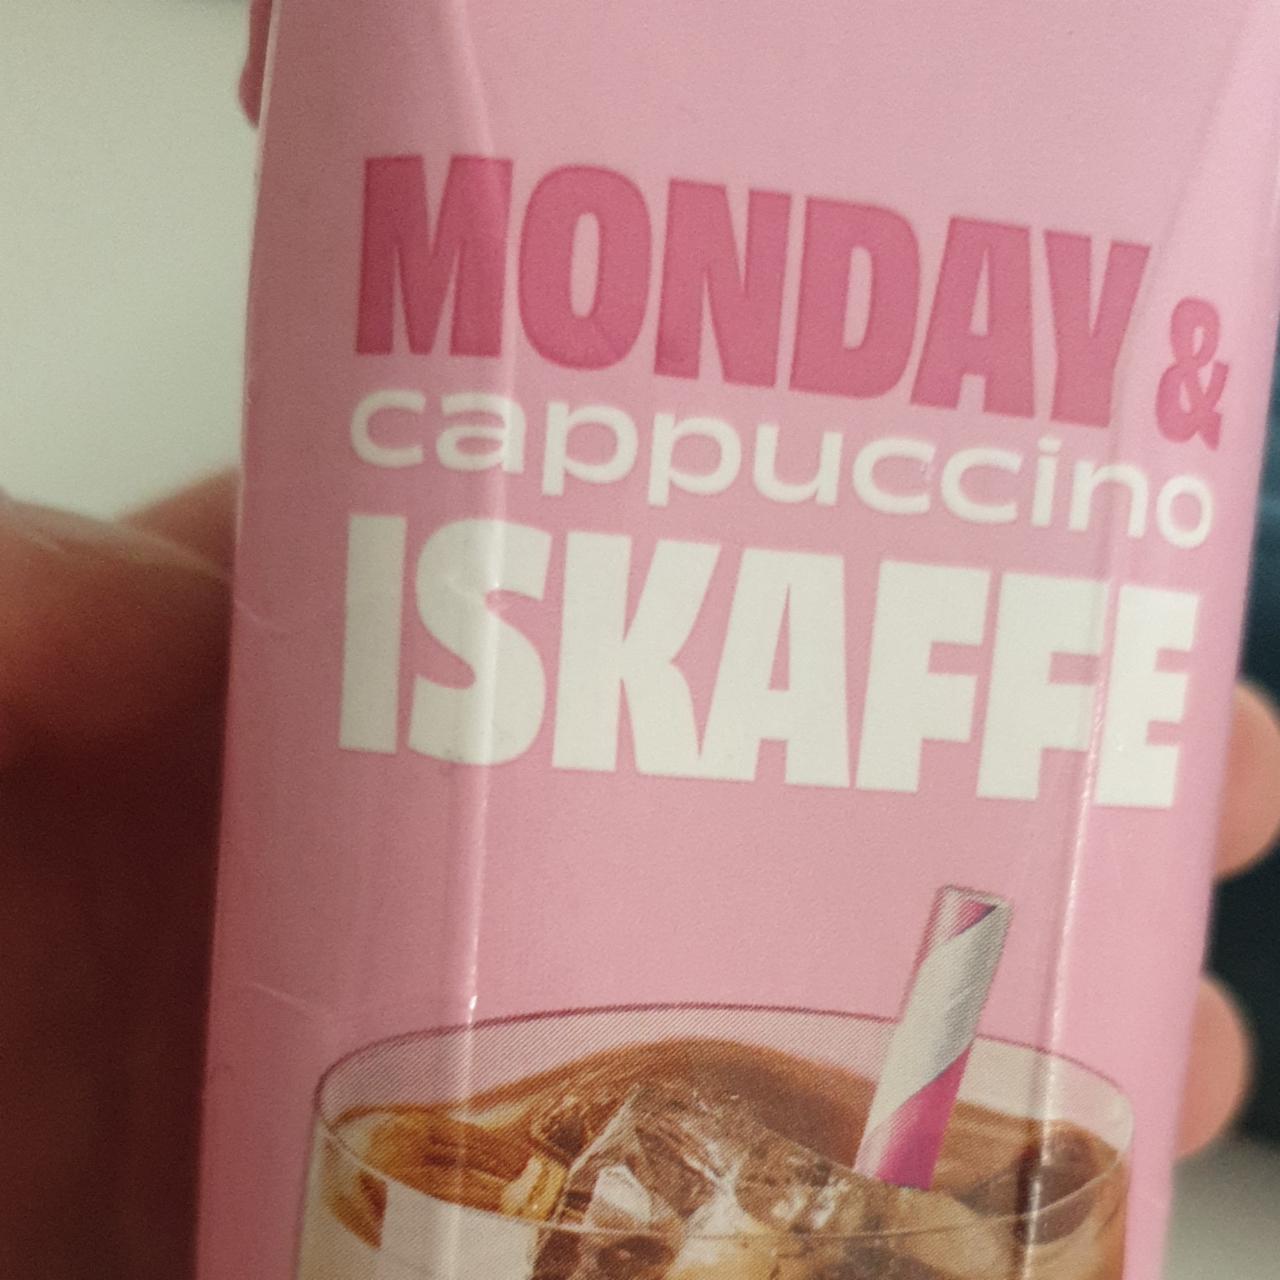 Fotografie - Monday & cappuccino iskaffe Geia Food